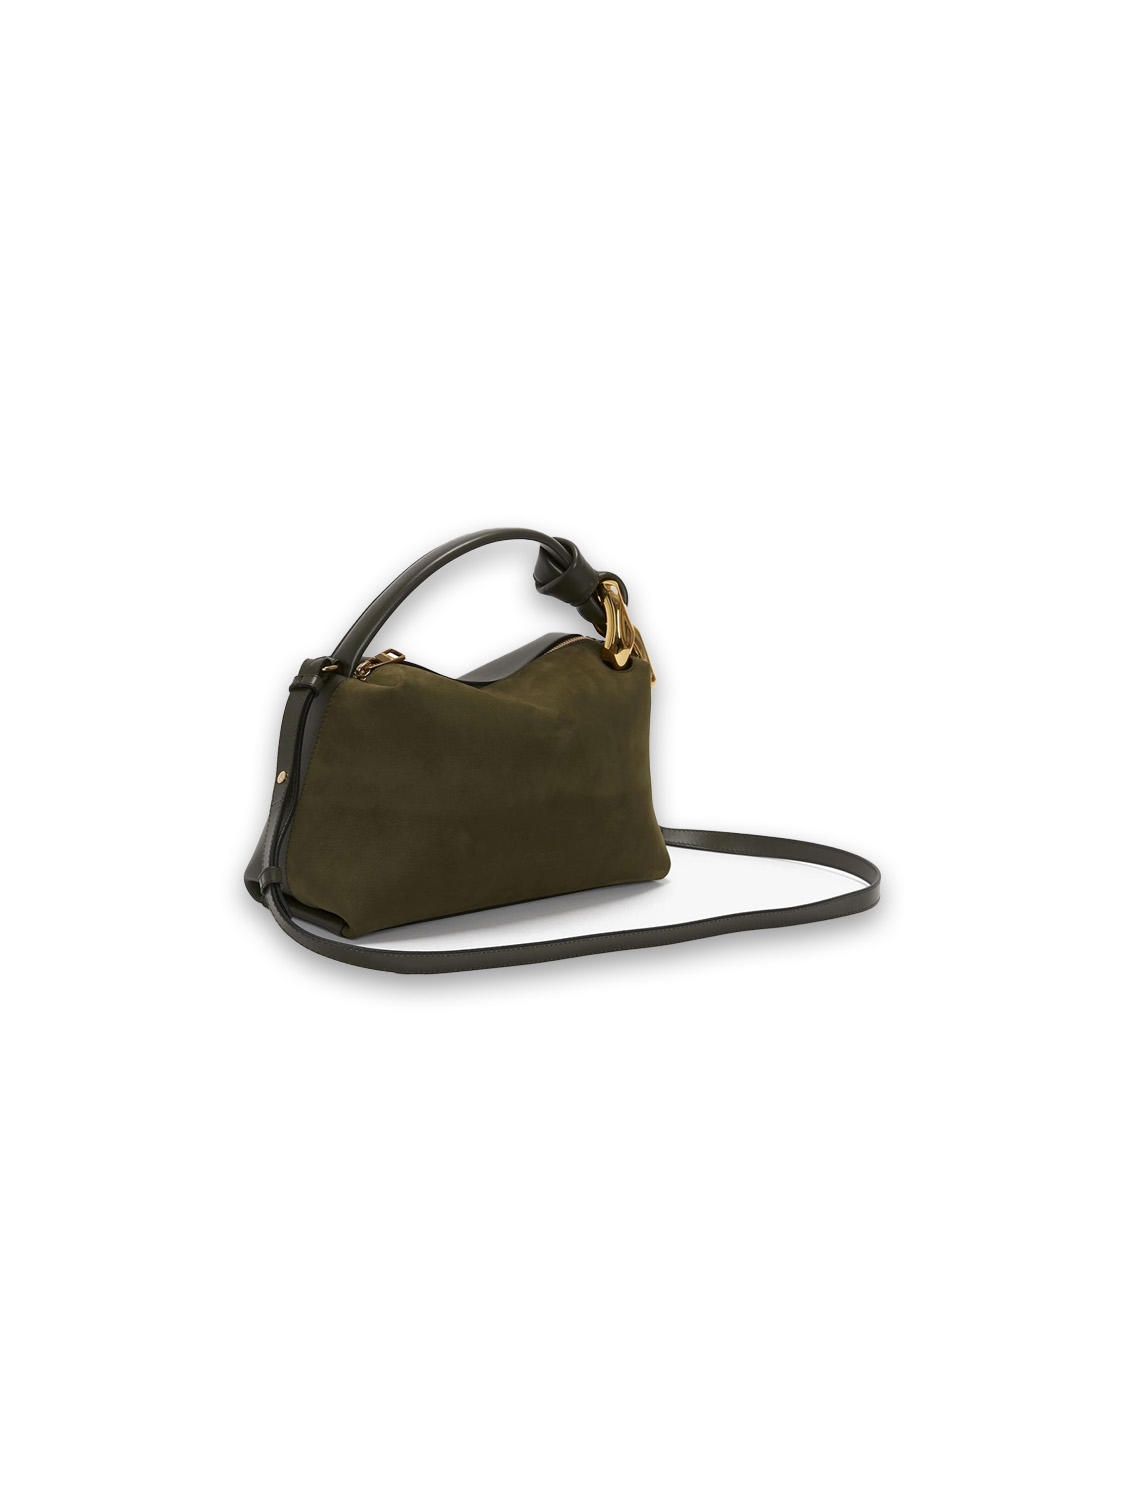 JW Anderson Croner Bag - Crossbody bag made of leather  khaki One Size